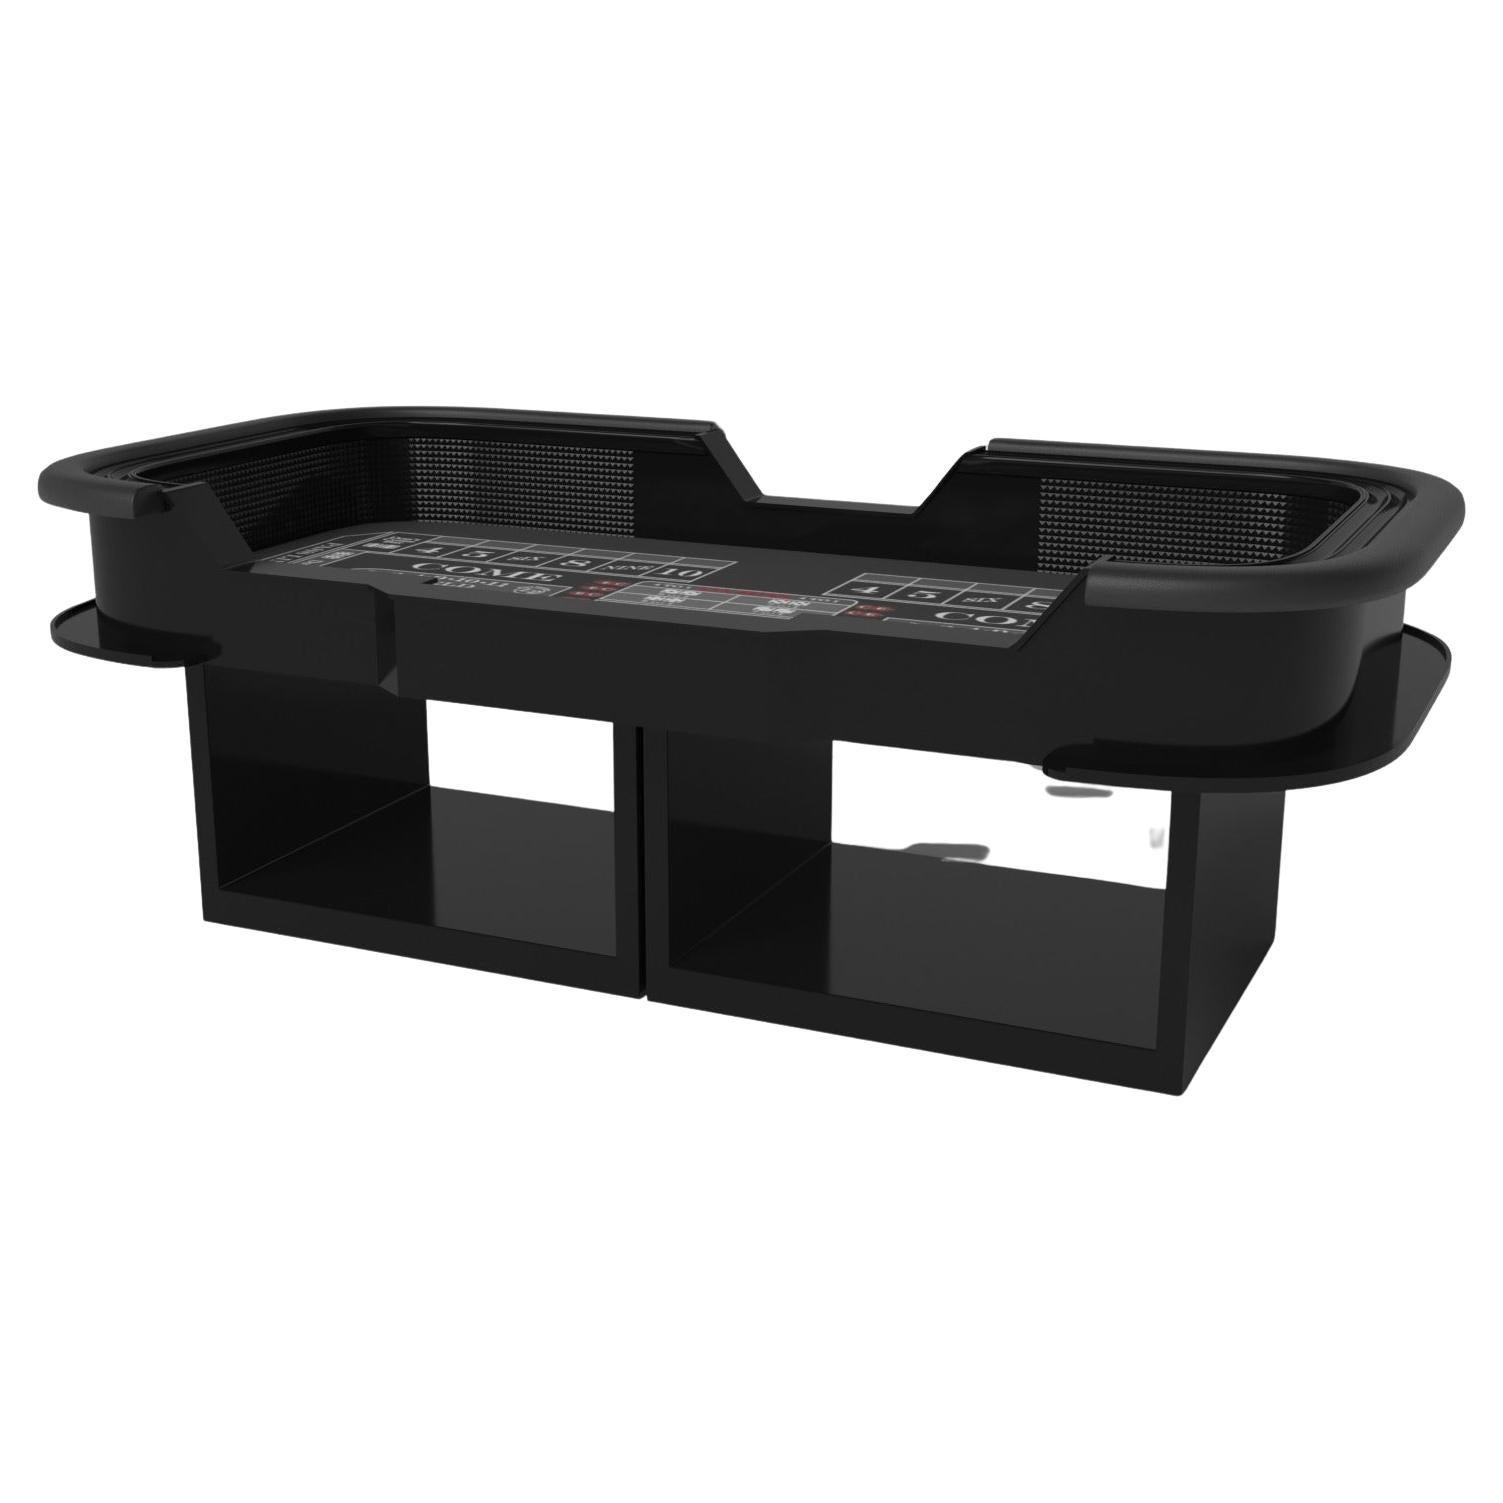 Elevate Customs Ambrosia Craps Tables / Solid Pantone Black Color in 9'9" - USA For Sale